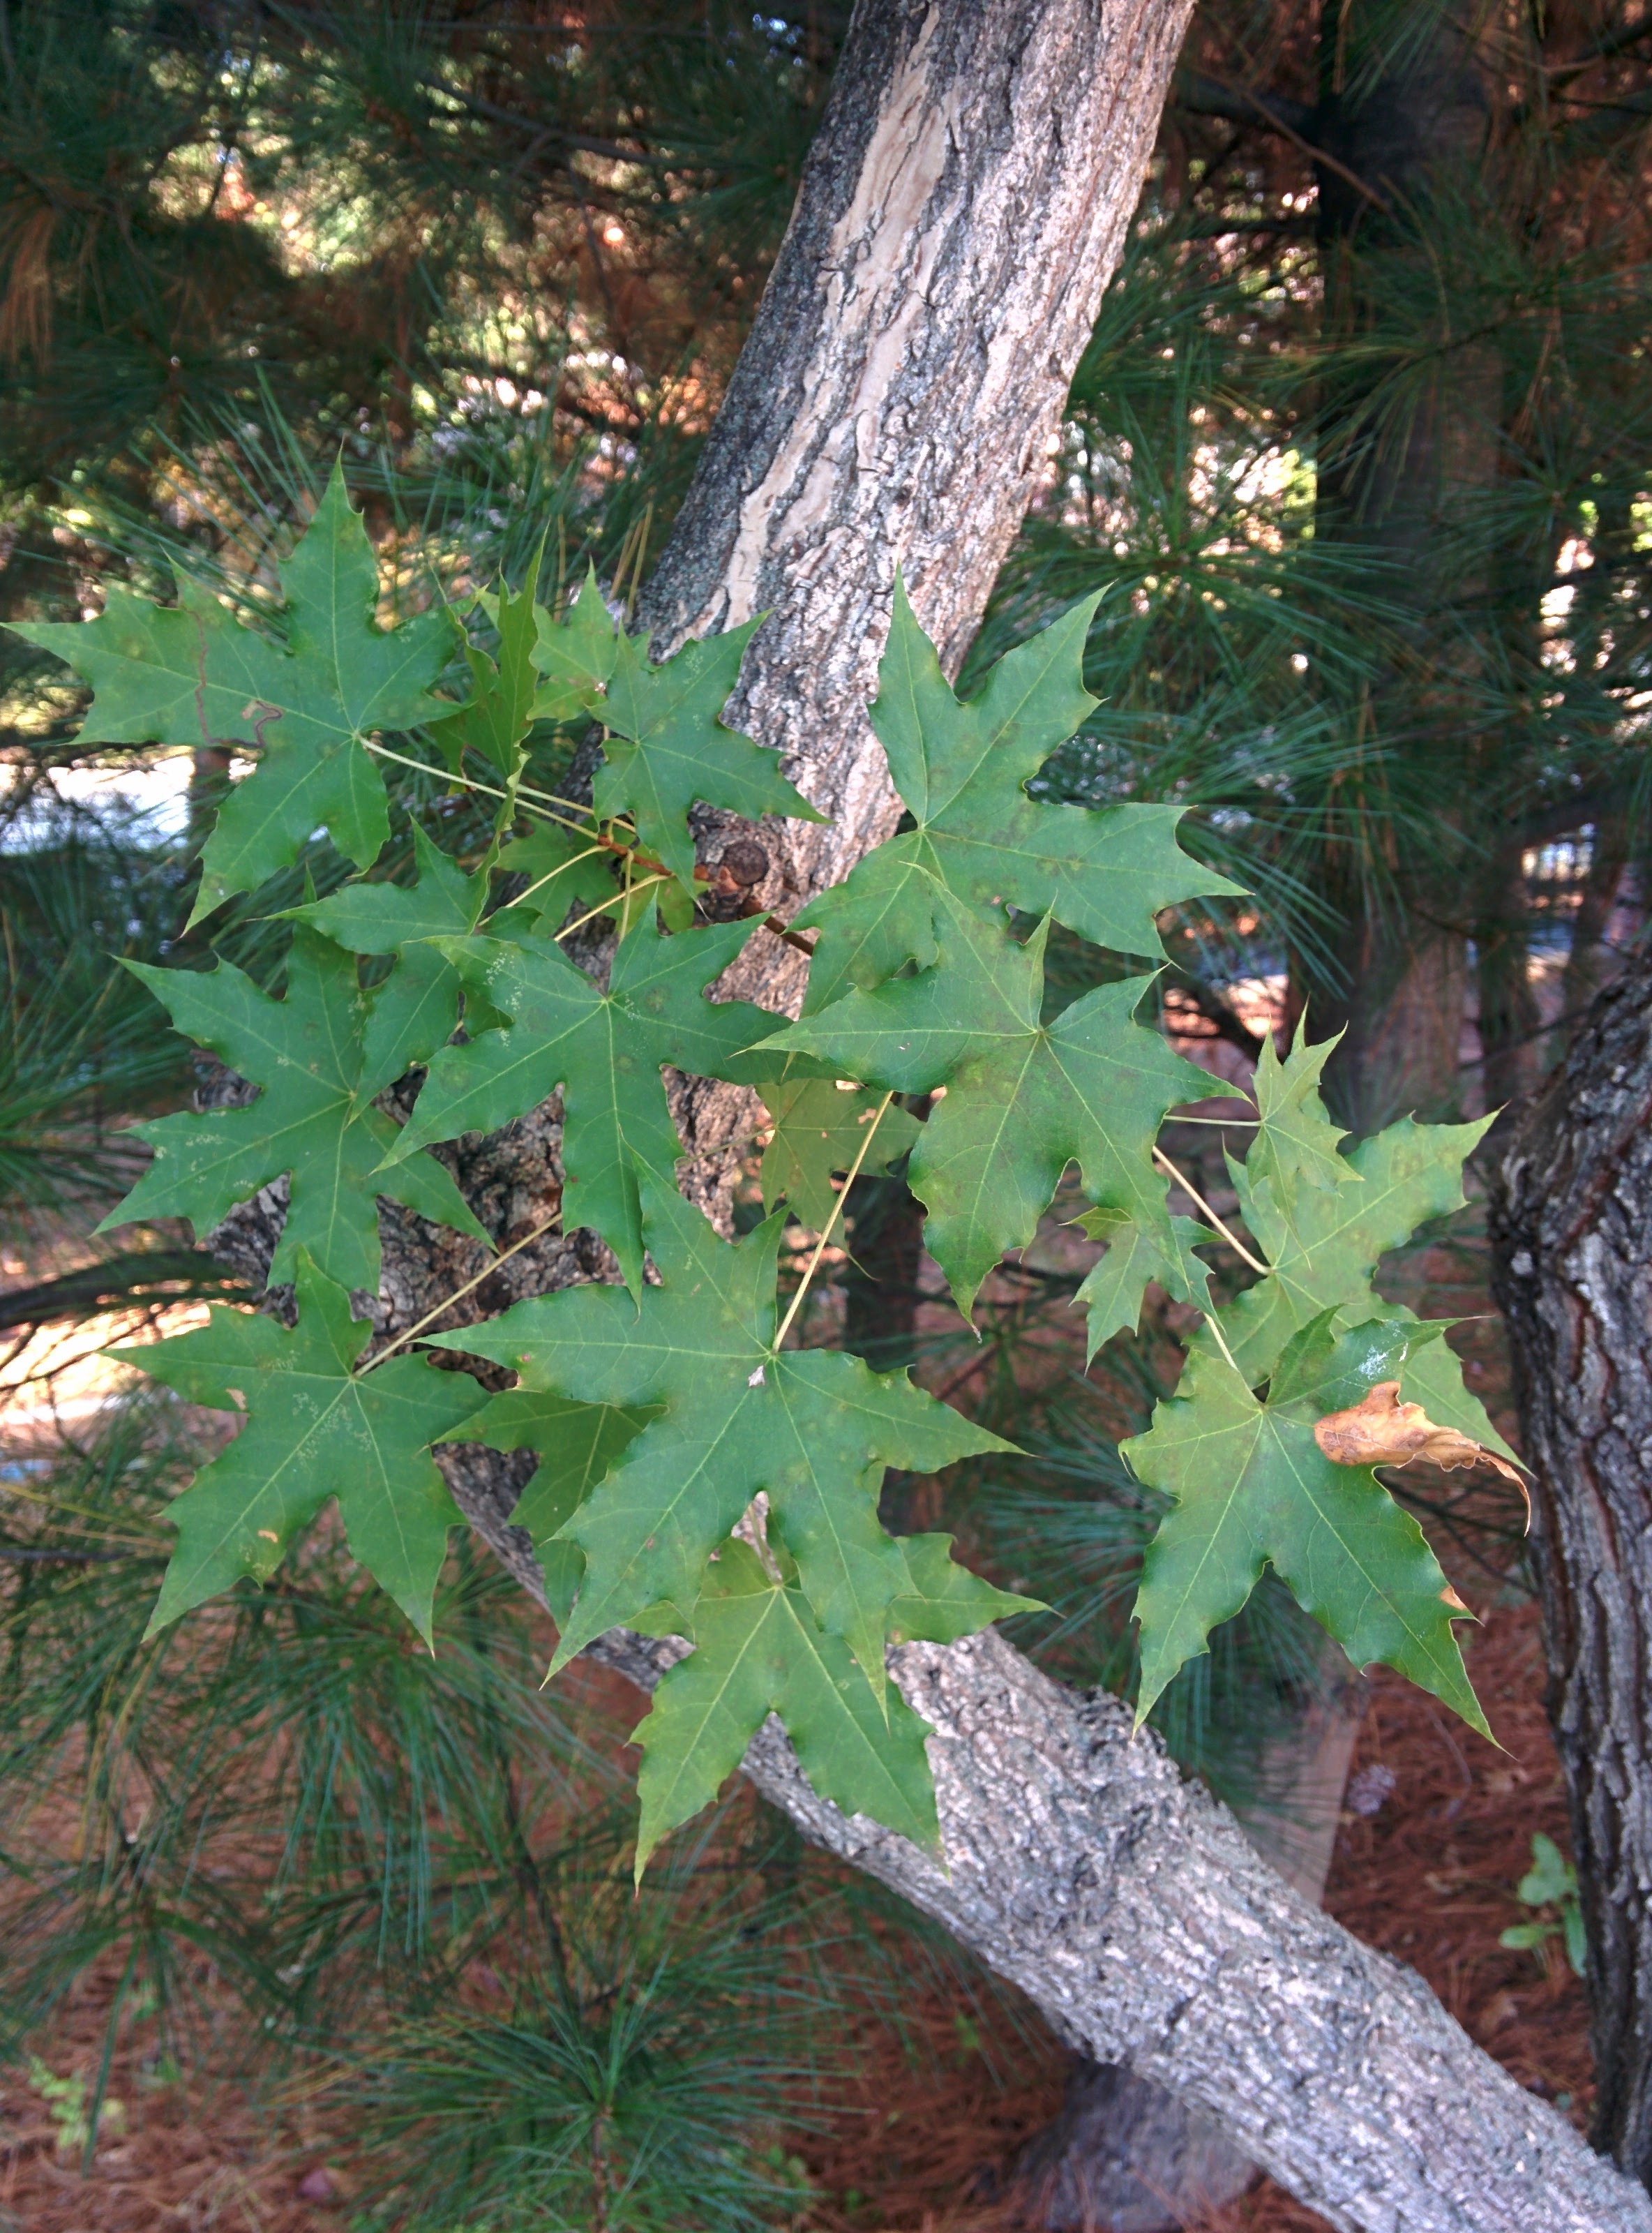 IMG_20151013_161833.jpg 아직은 생생한 초록색의 단풍나무 닮은 잎과 줄기 -- 고로쇠나무